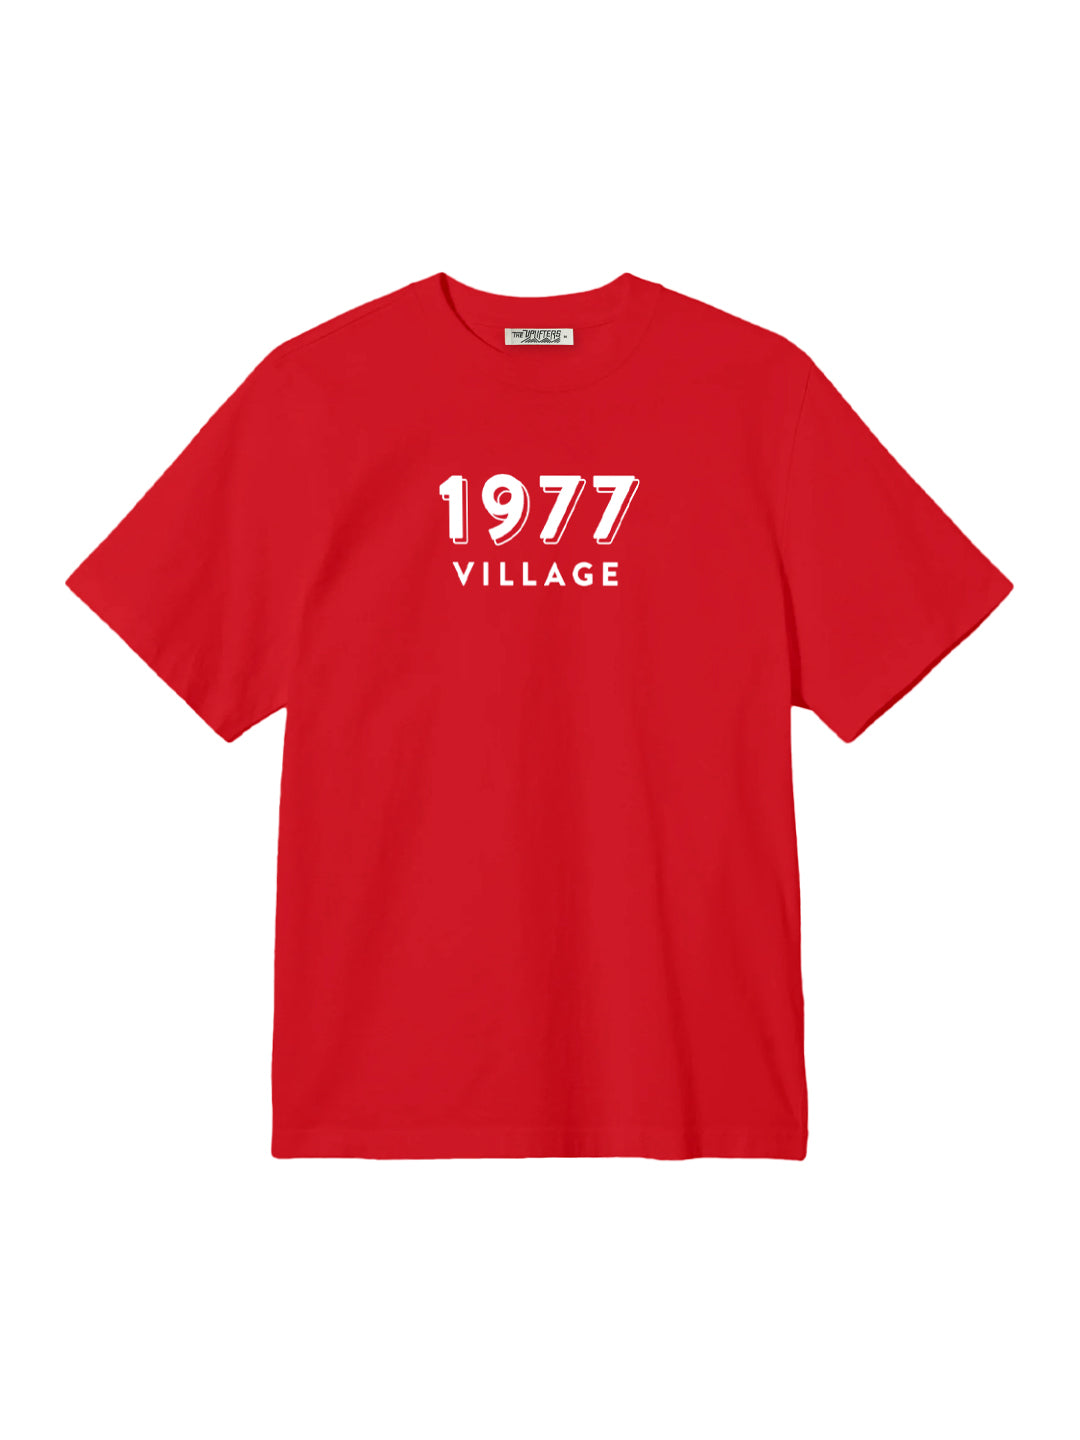 Village 1977 Youth Tee